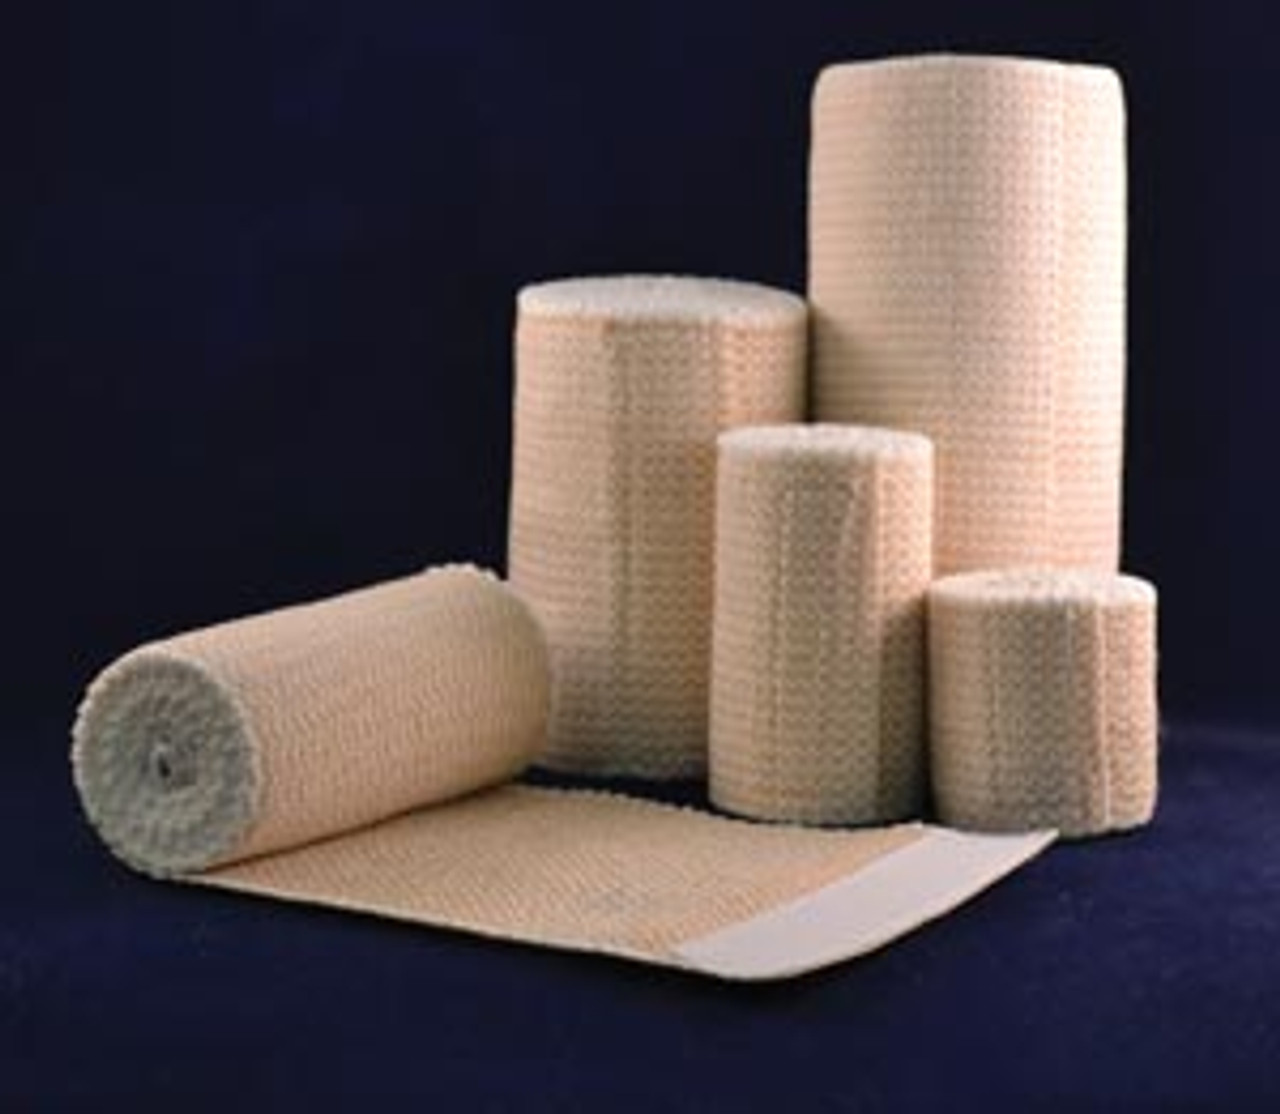  20 Pack Plaster Cloth Gauze Bandages Bulk Each Roll 5